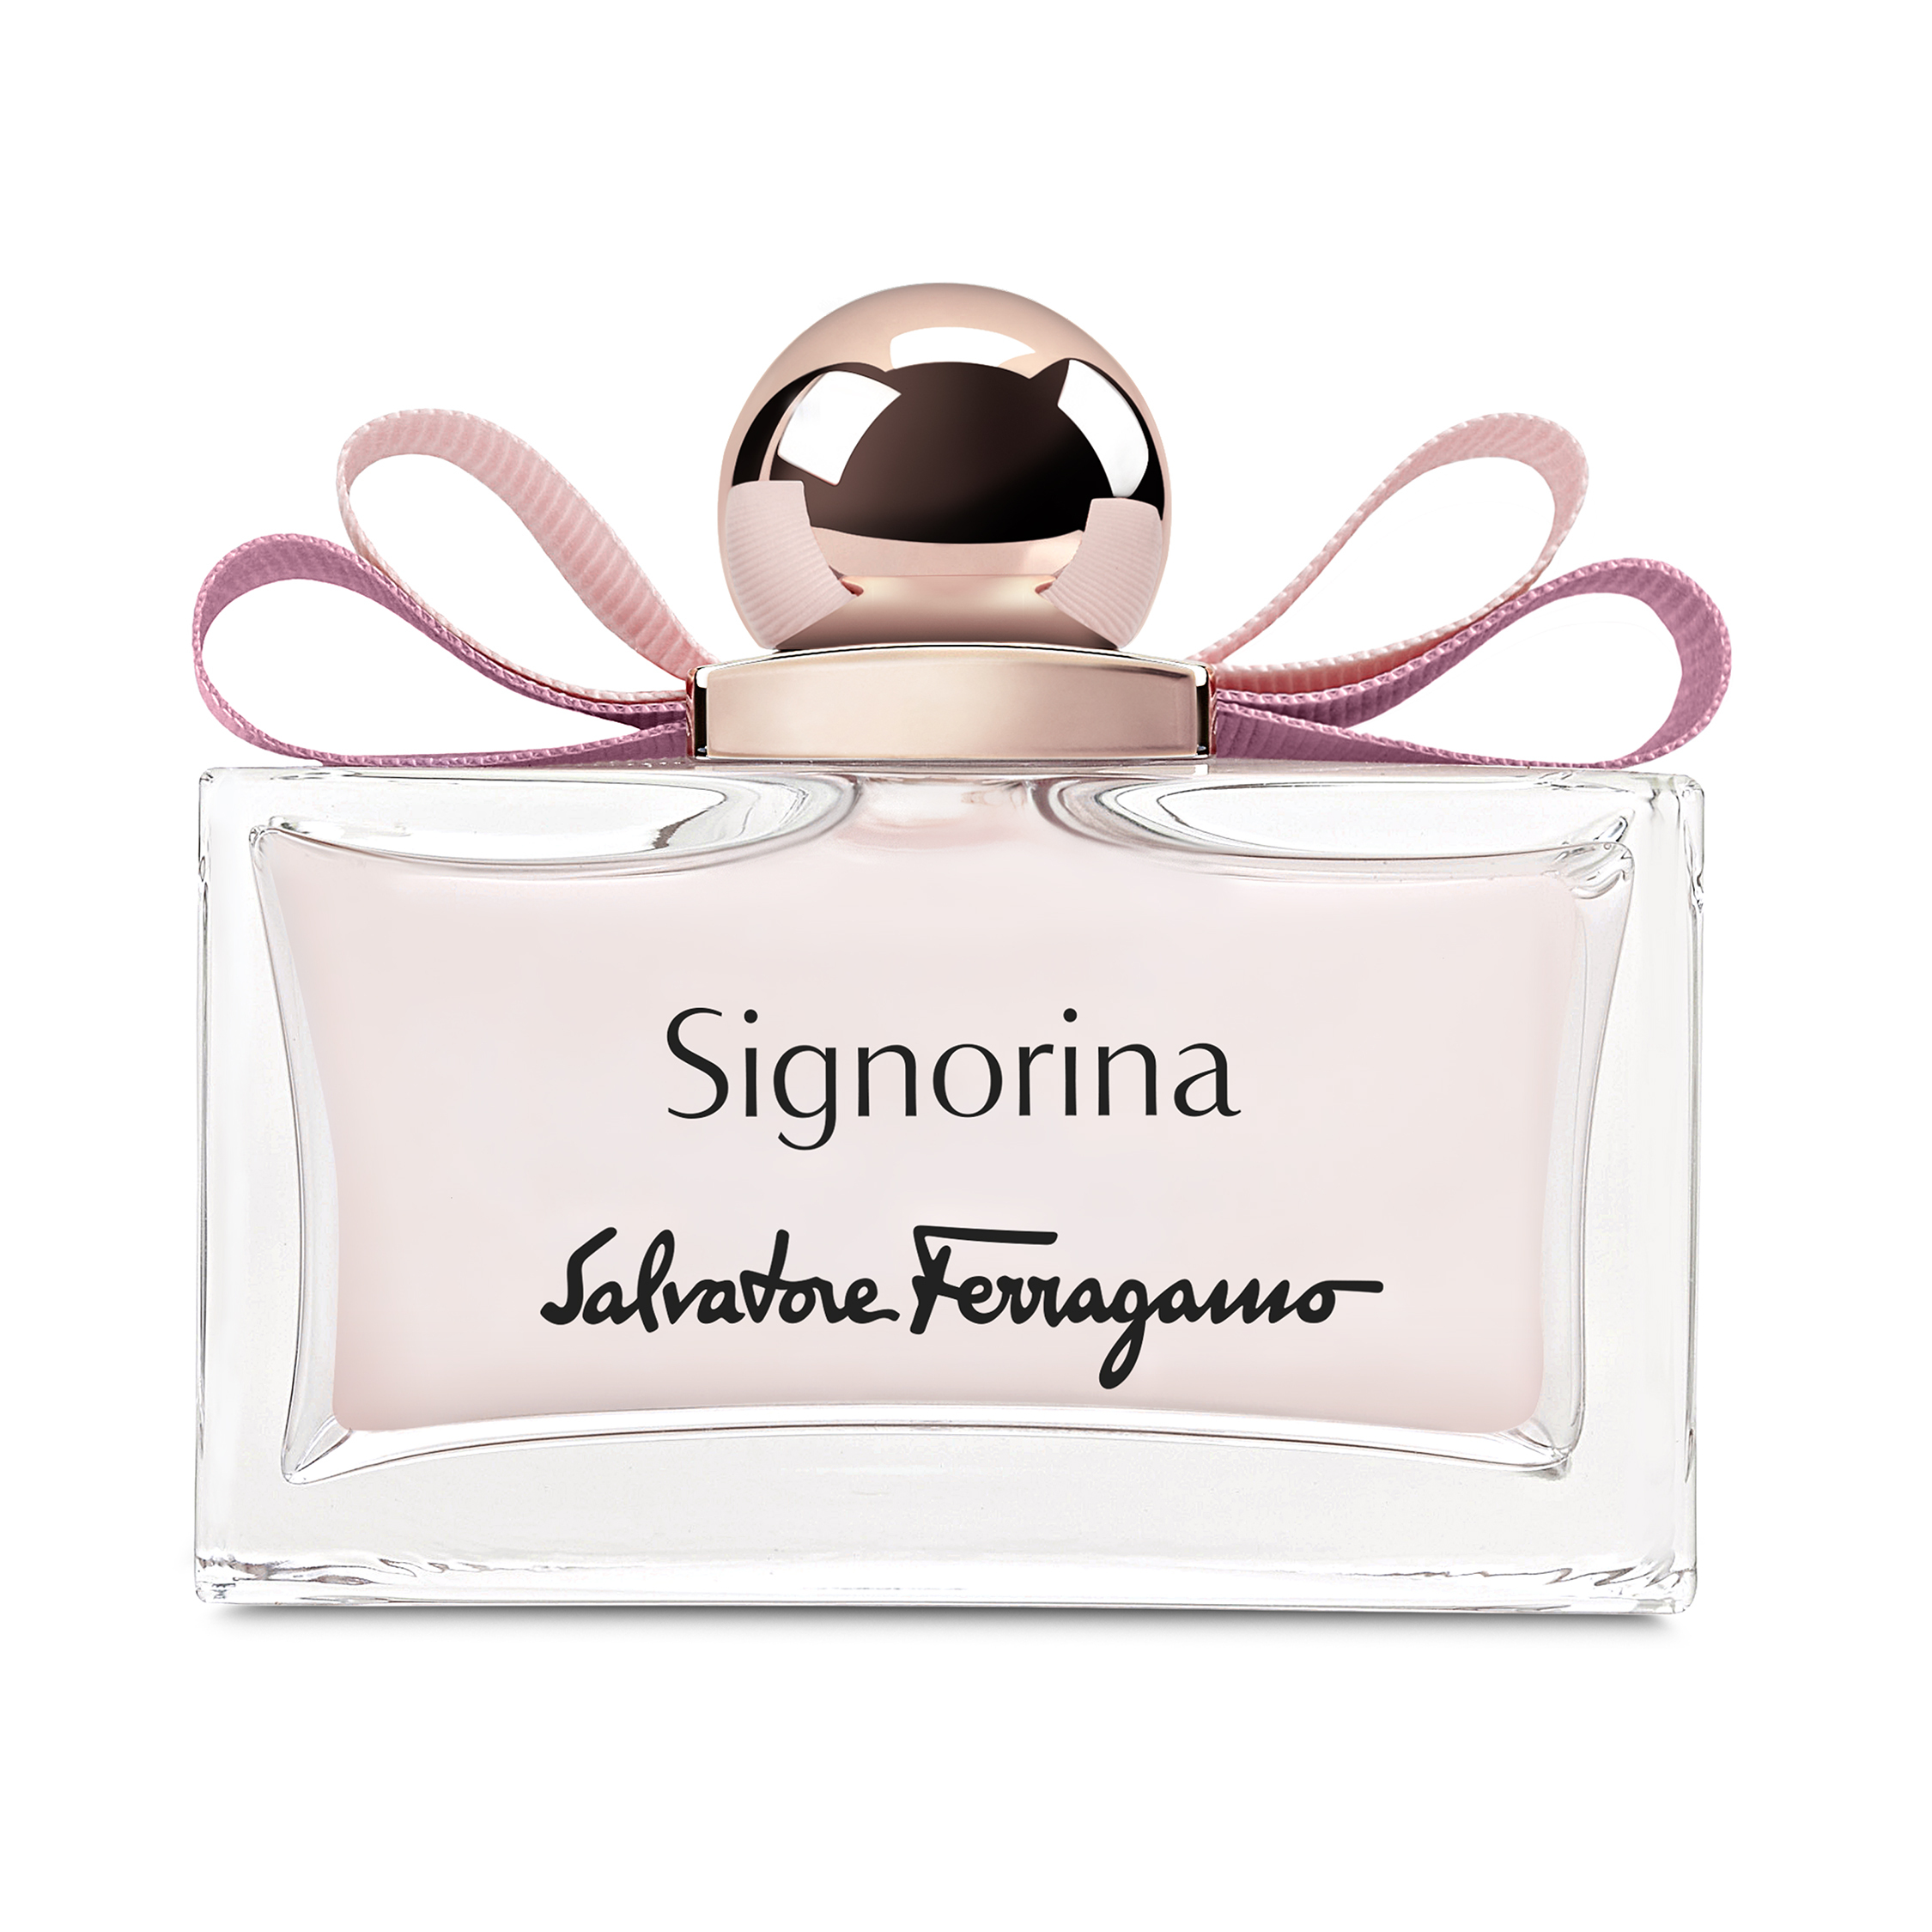 Salvatore Ferragamo Signorina eau de parfum / 100 ml / dames